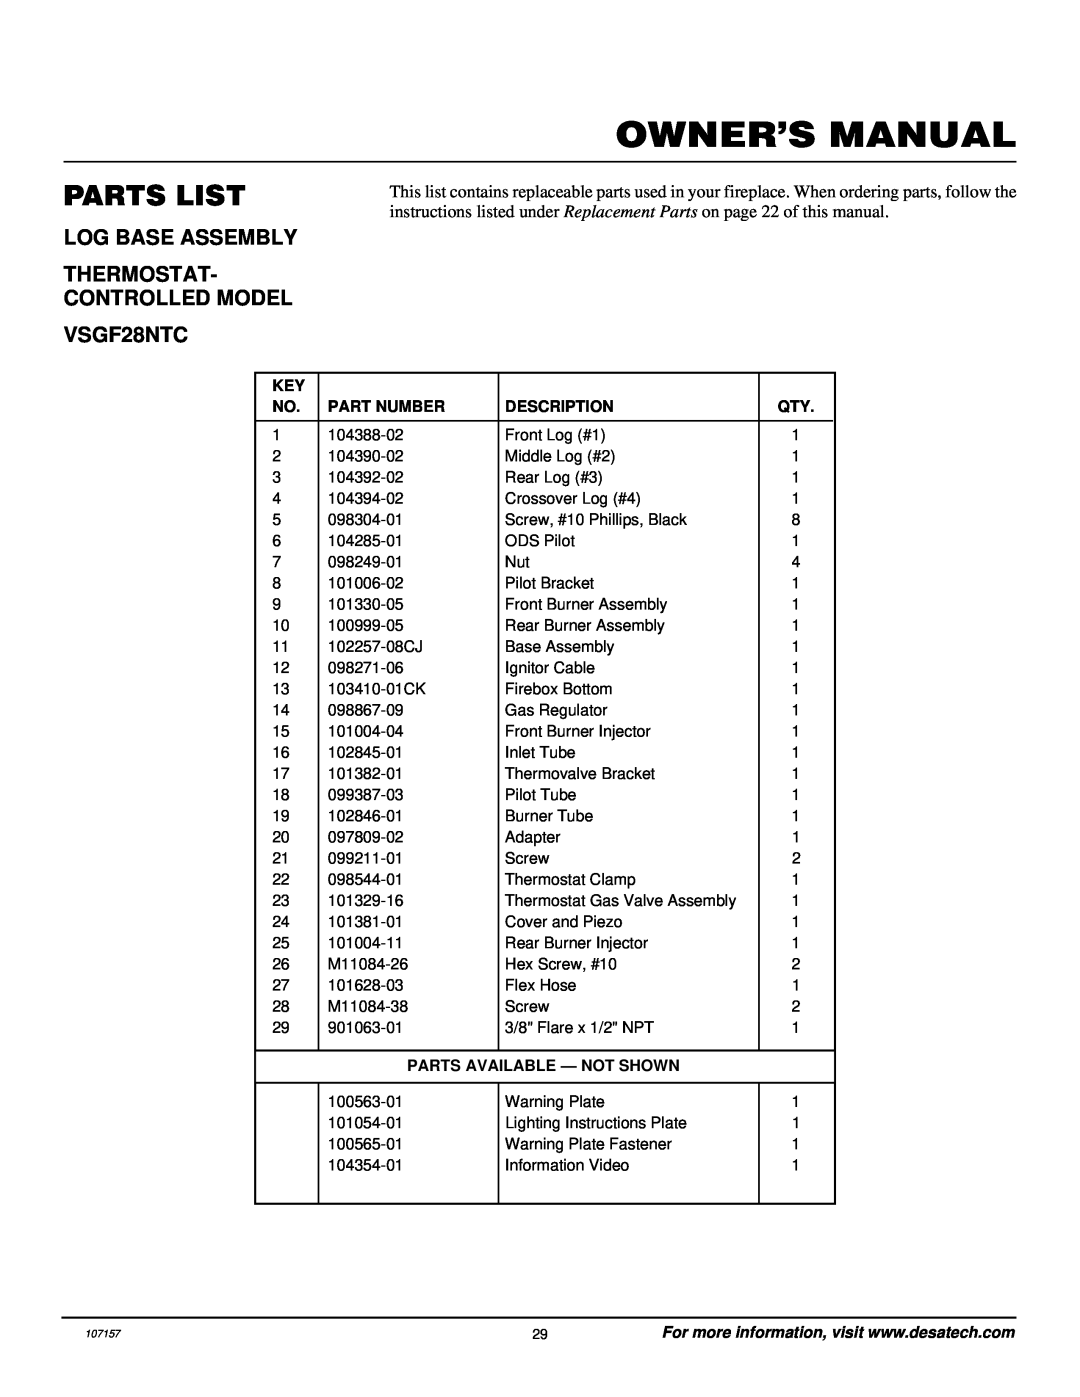 Vanguard Heating VSGF28NTC, VSGF28NVA Parts List, Log Base Assembly Thermostat- Controlled Model, Part Number, Description 